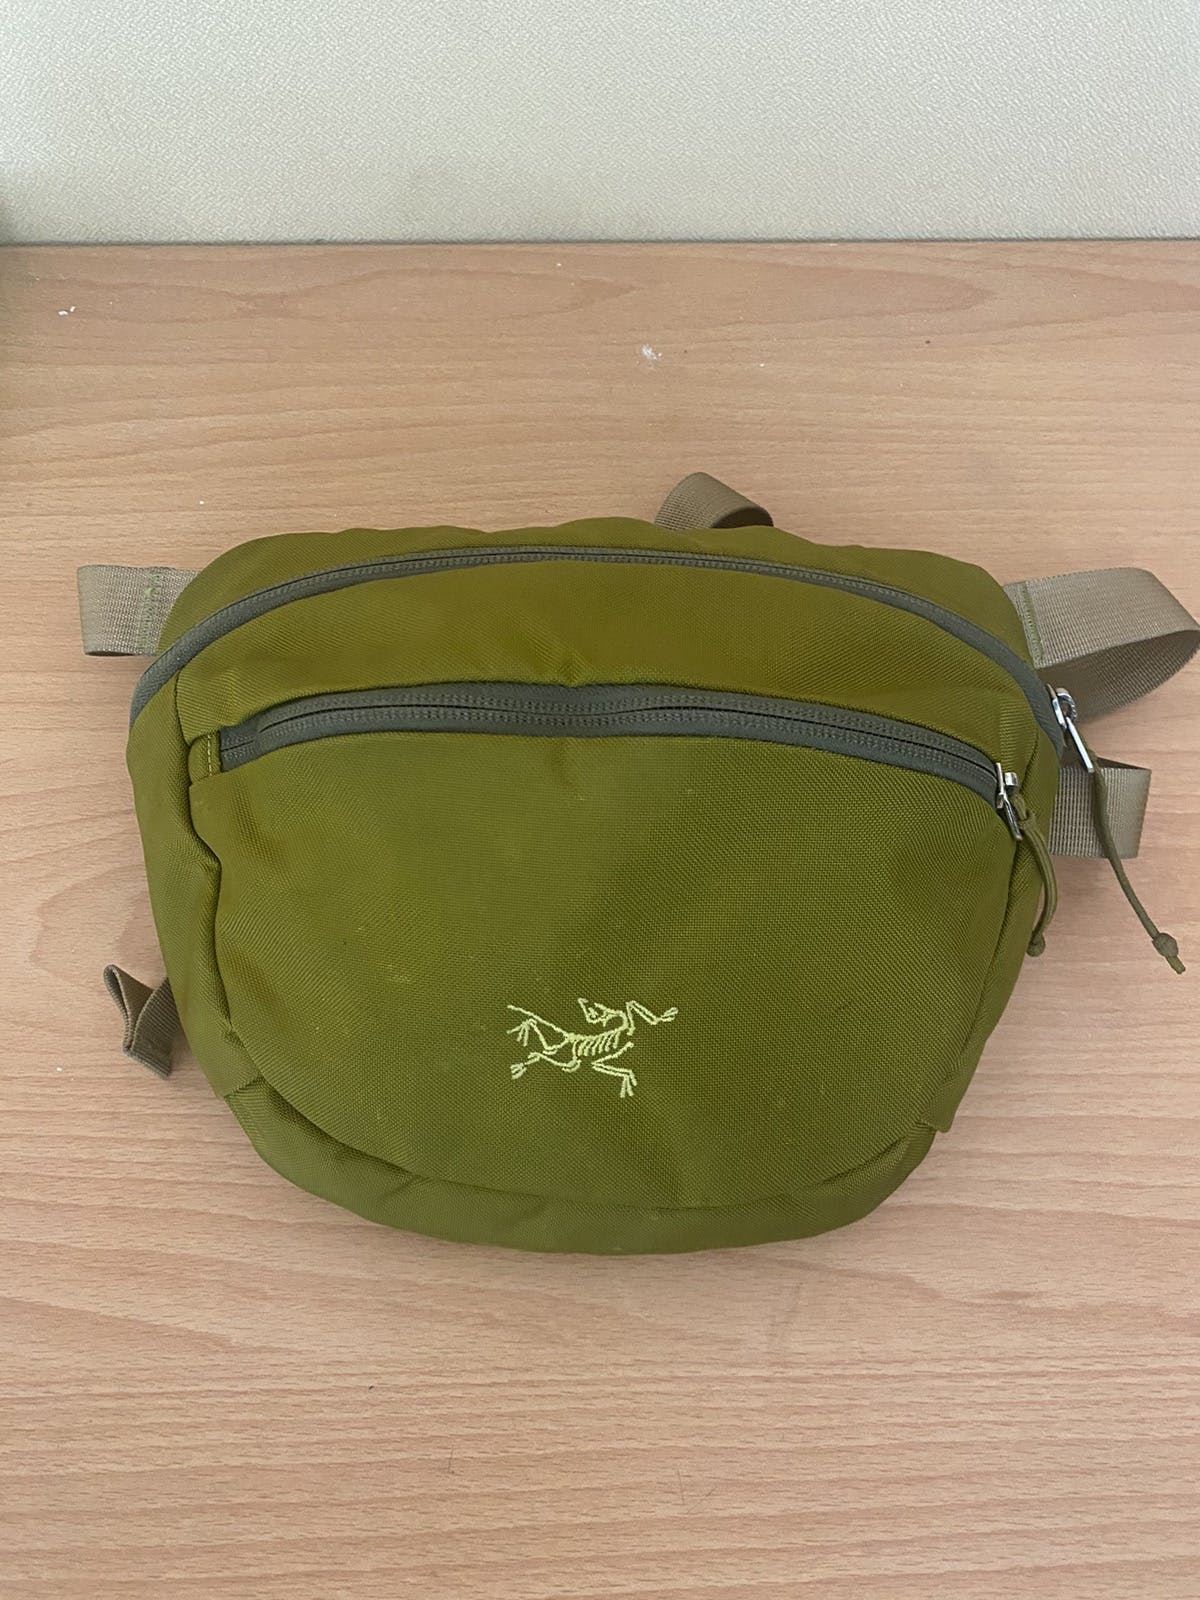 Authentic Arc’teryx Green Army Crossbody Sling Bag - 1